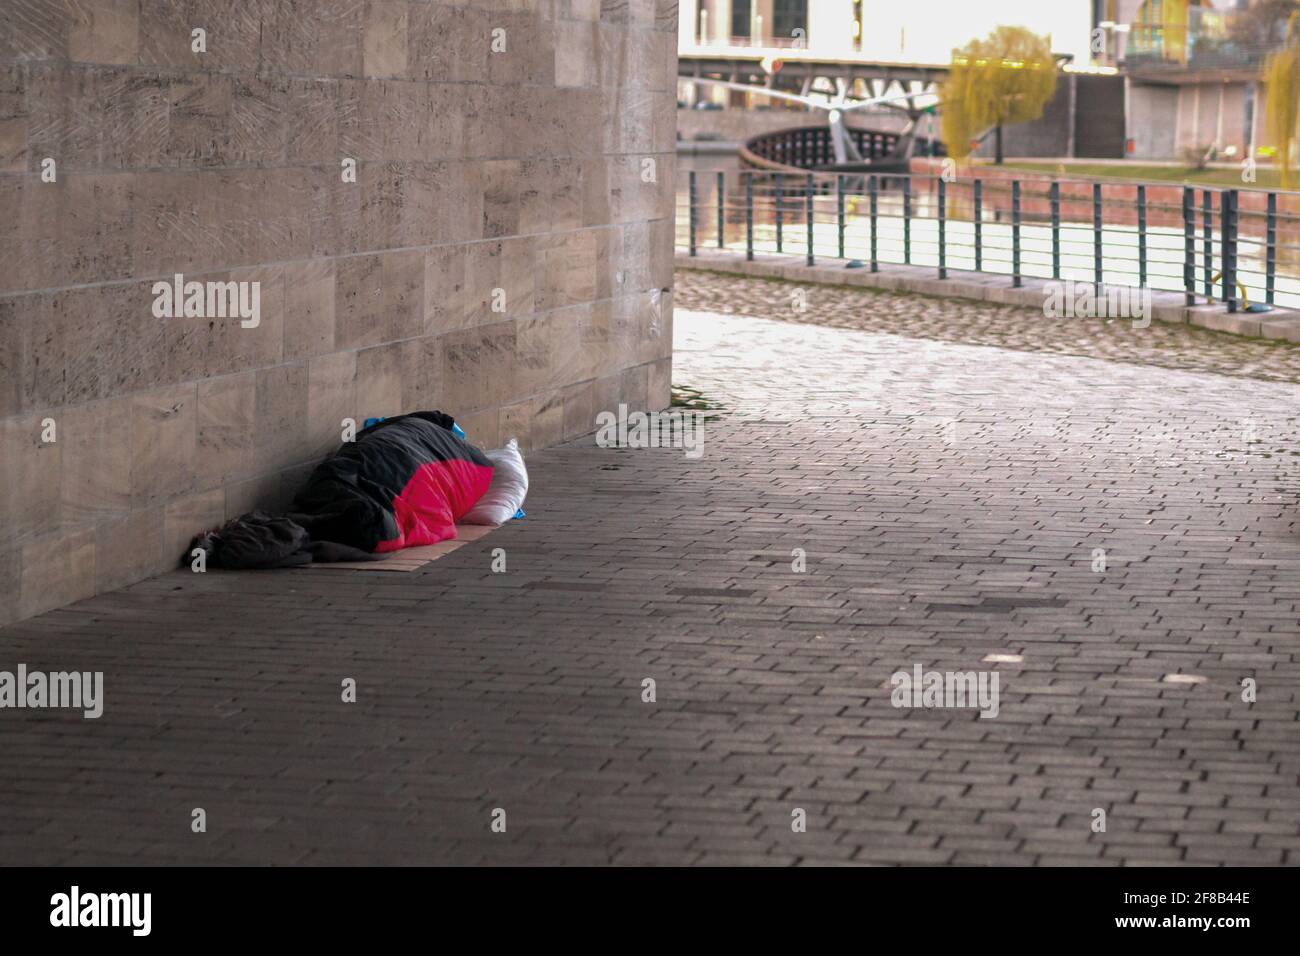 A homeless man in a sleeping bag under a bridge Stock Photo